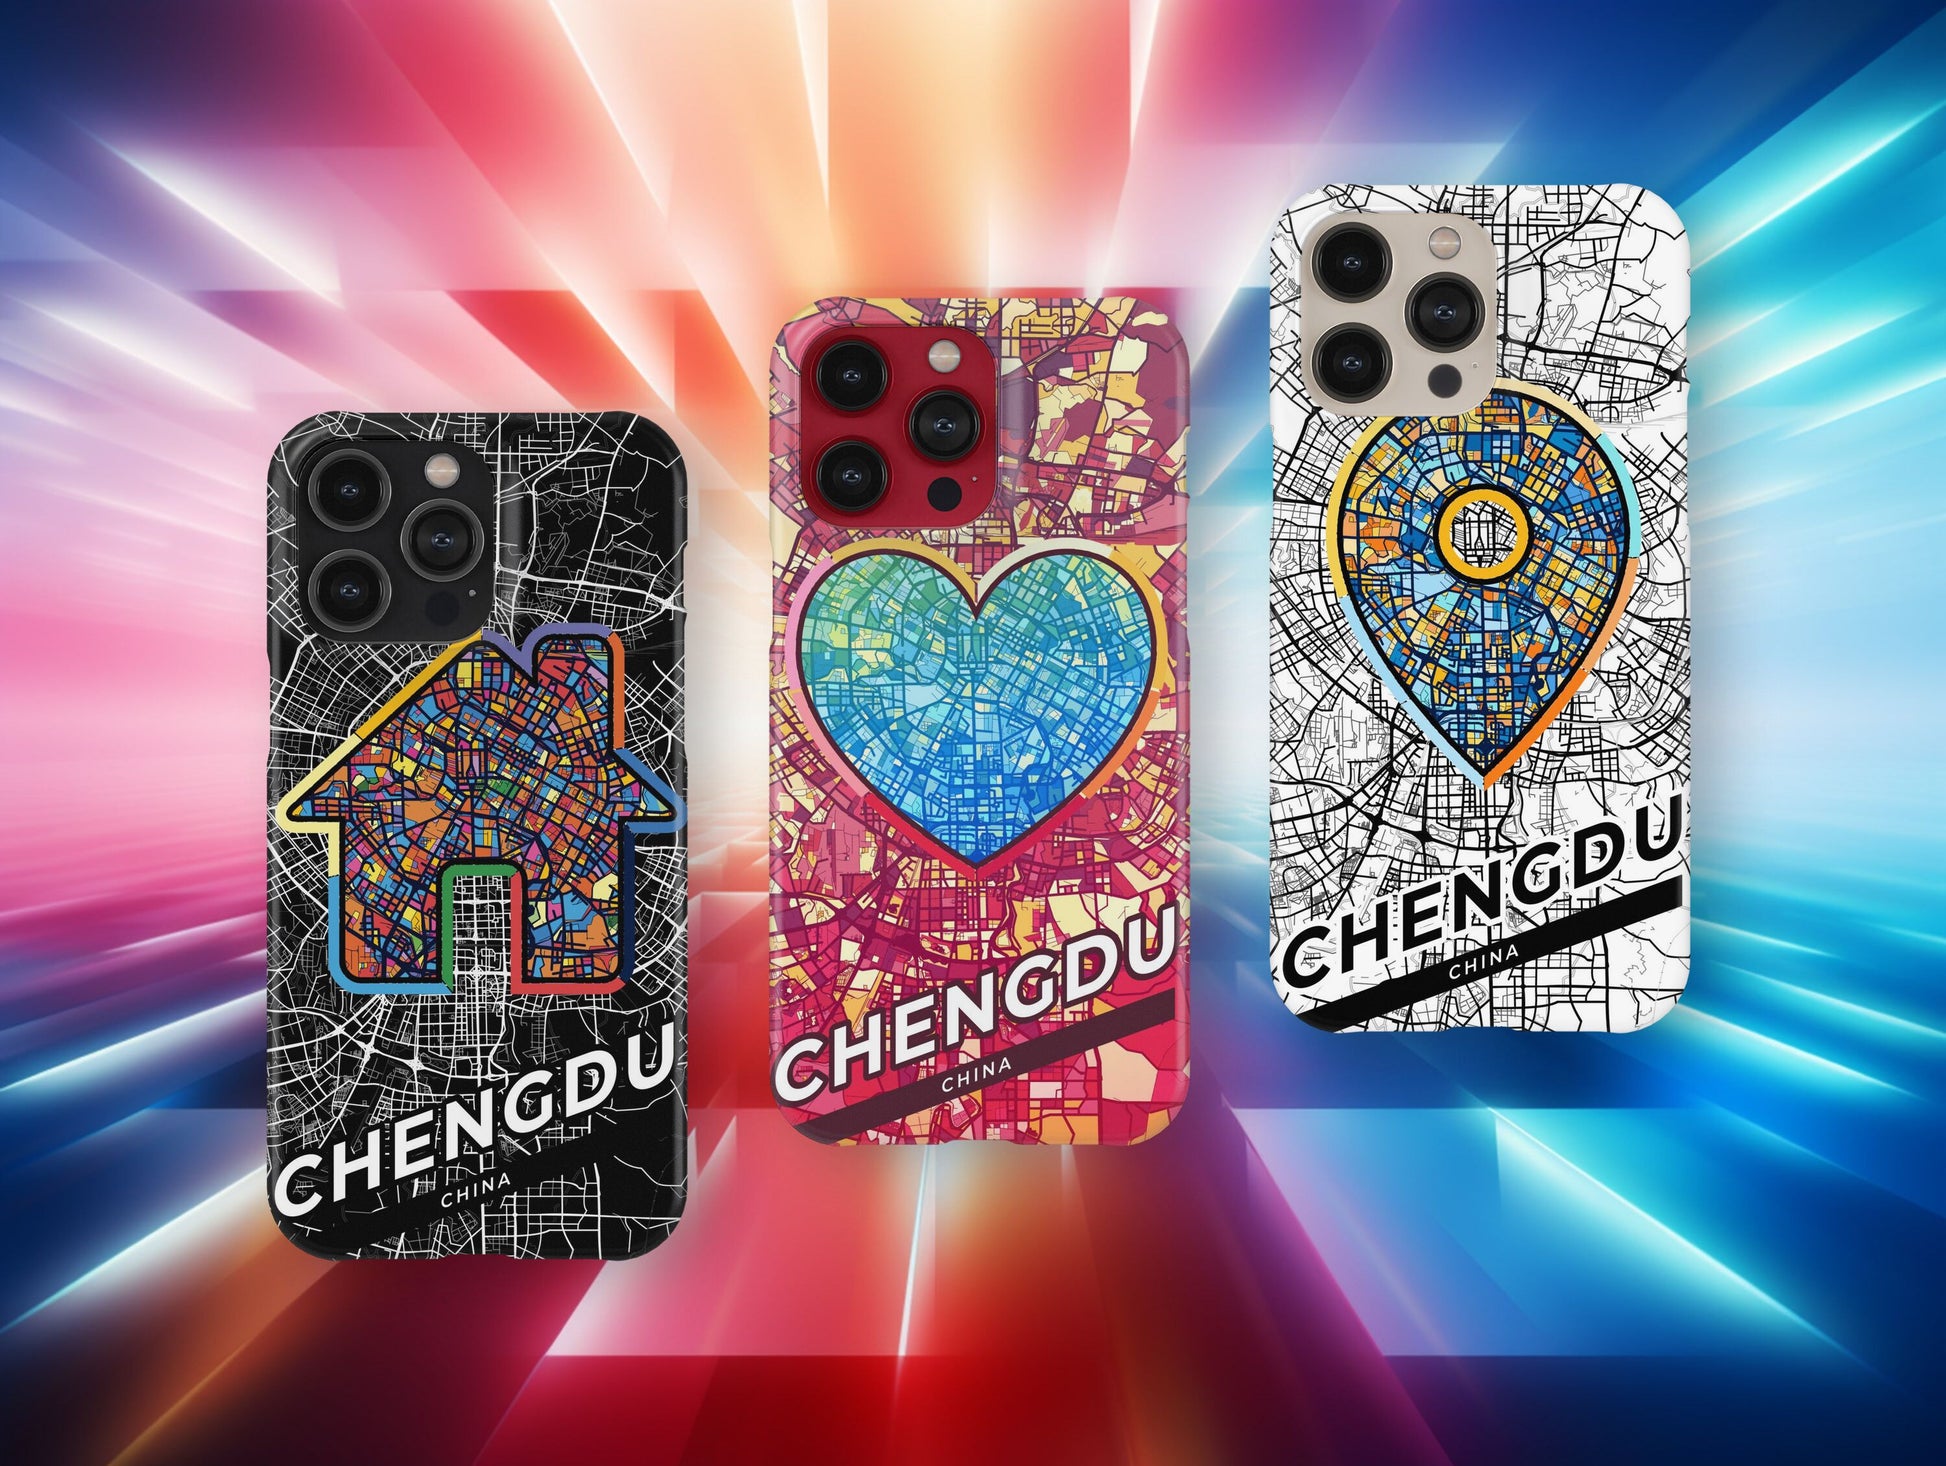 Chengdu China slim phone case with colorful icon. Birthday, wedding or housewarming gift. Couple match cases.